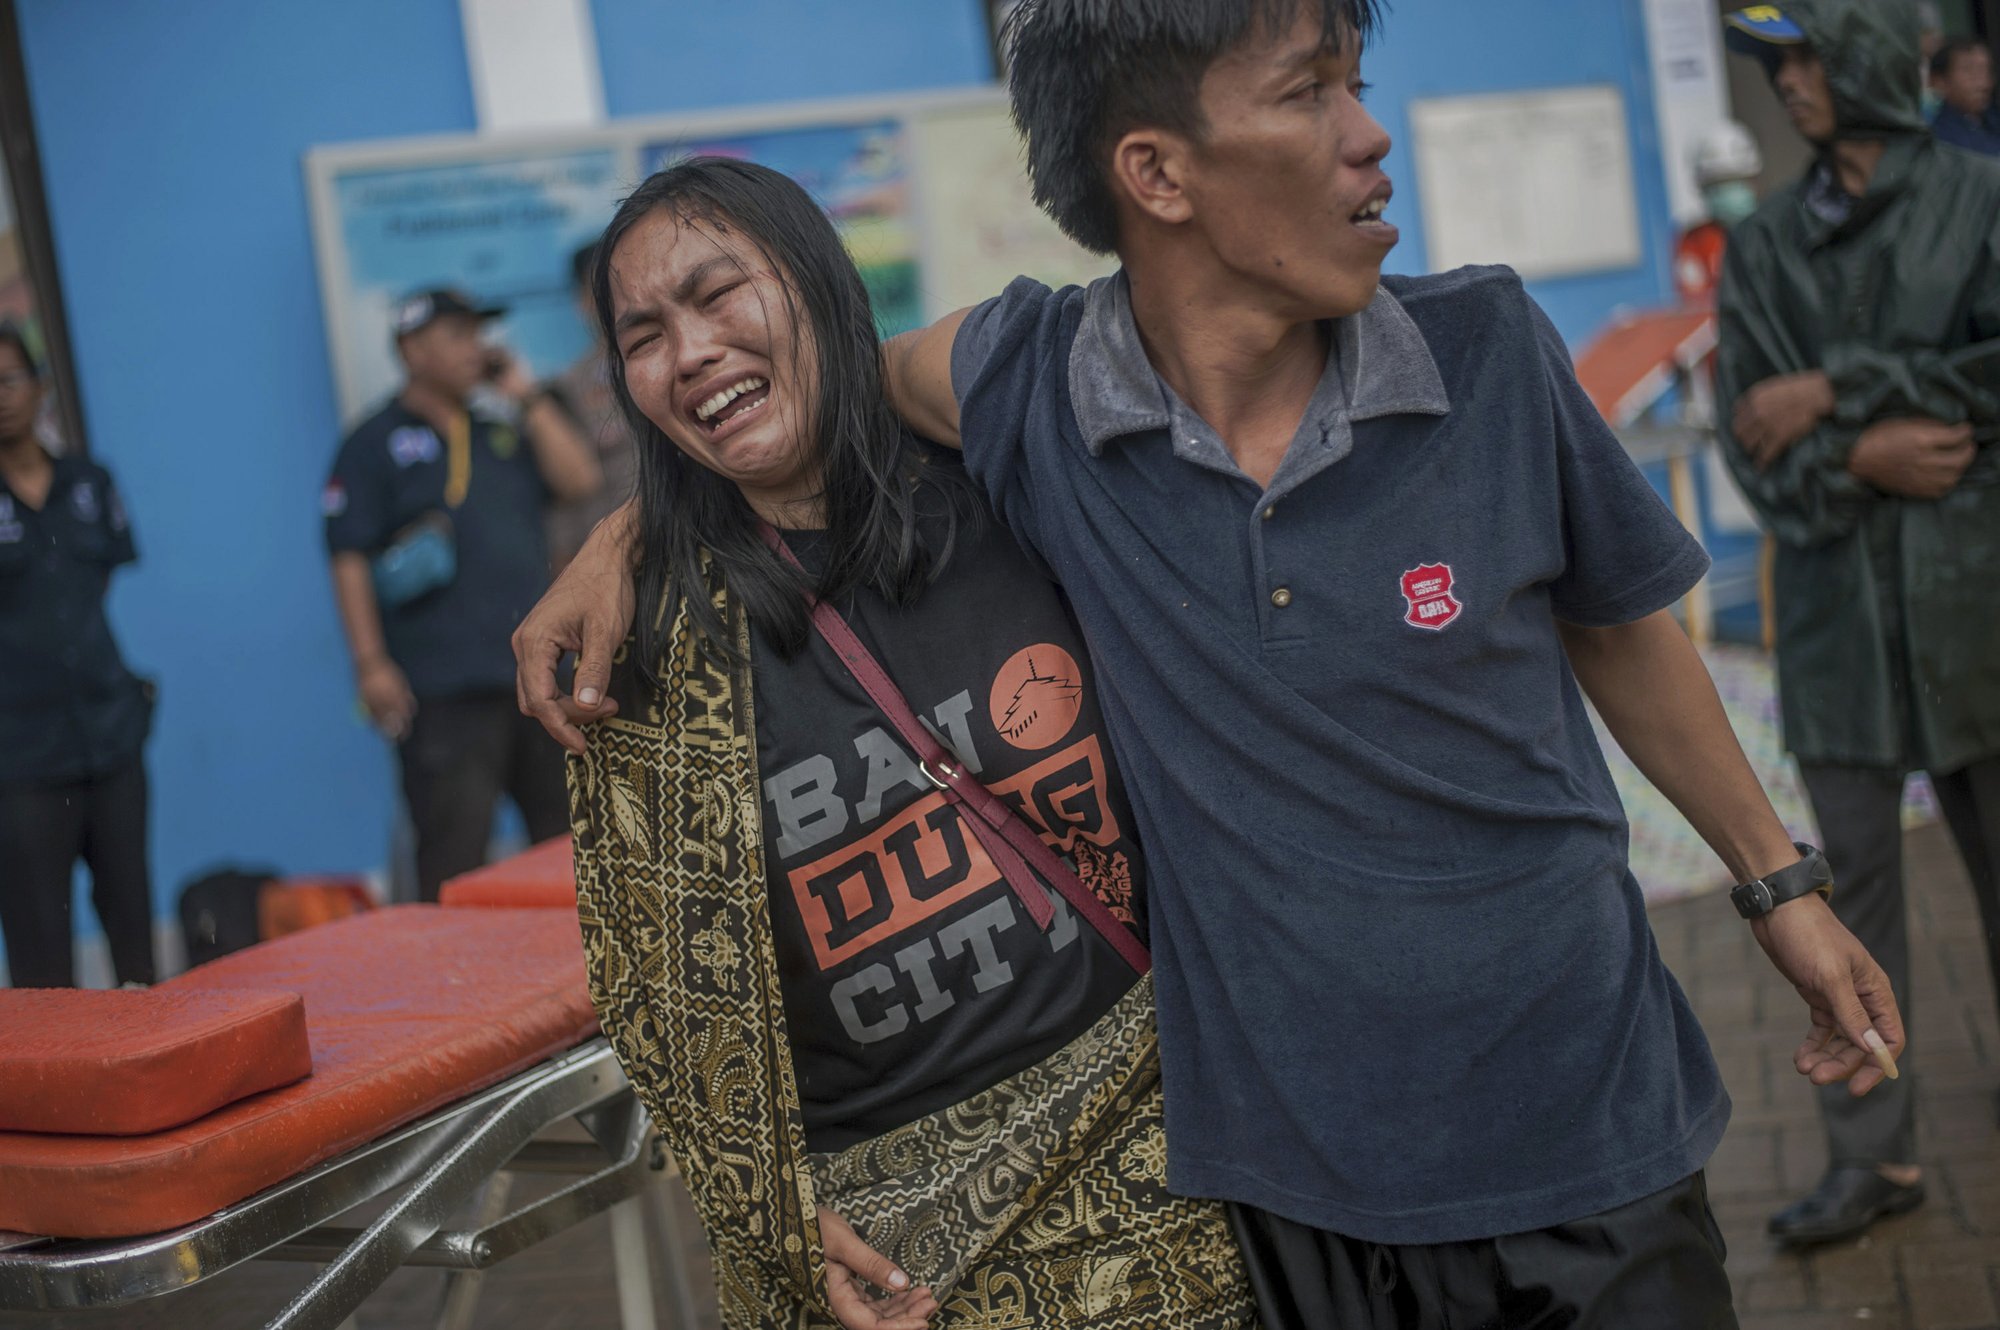 2000 - Tsunami hits Indonesia, killing over 220